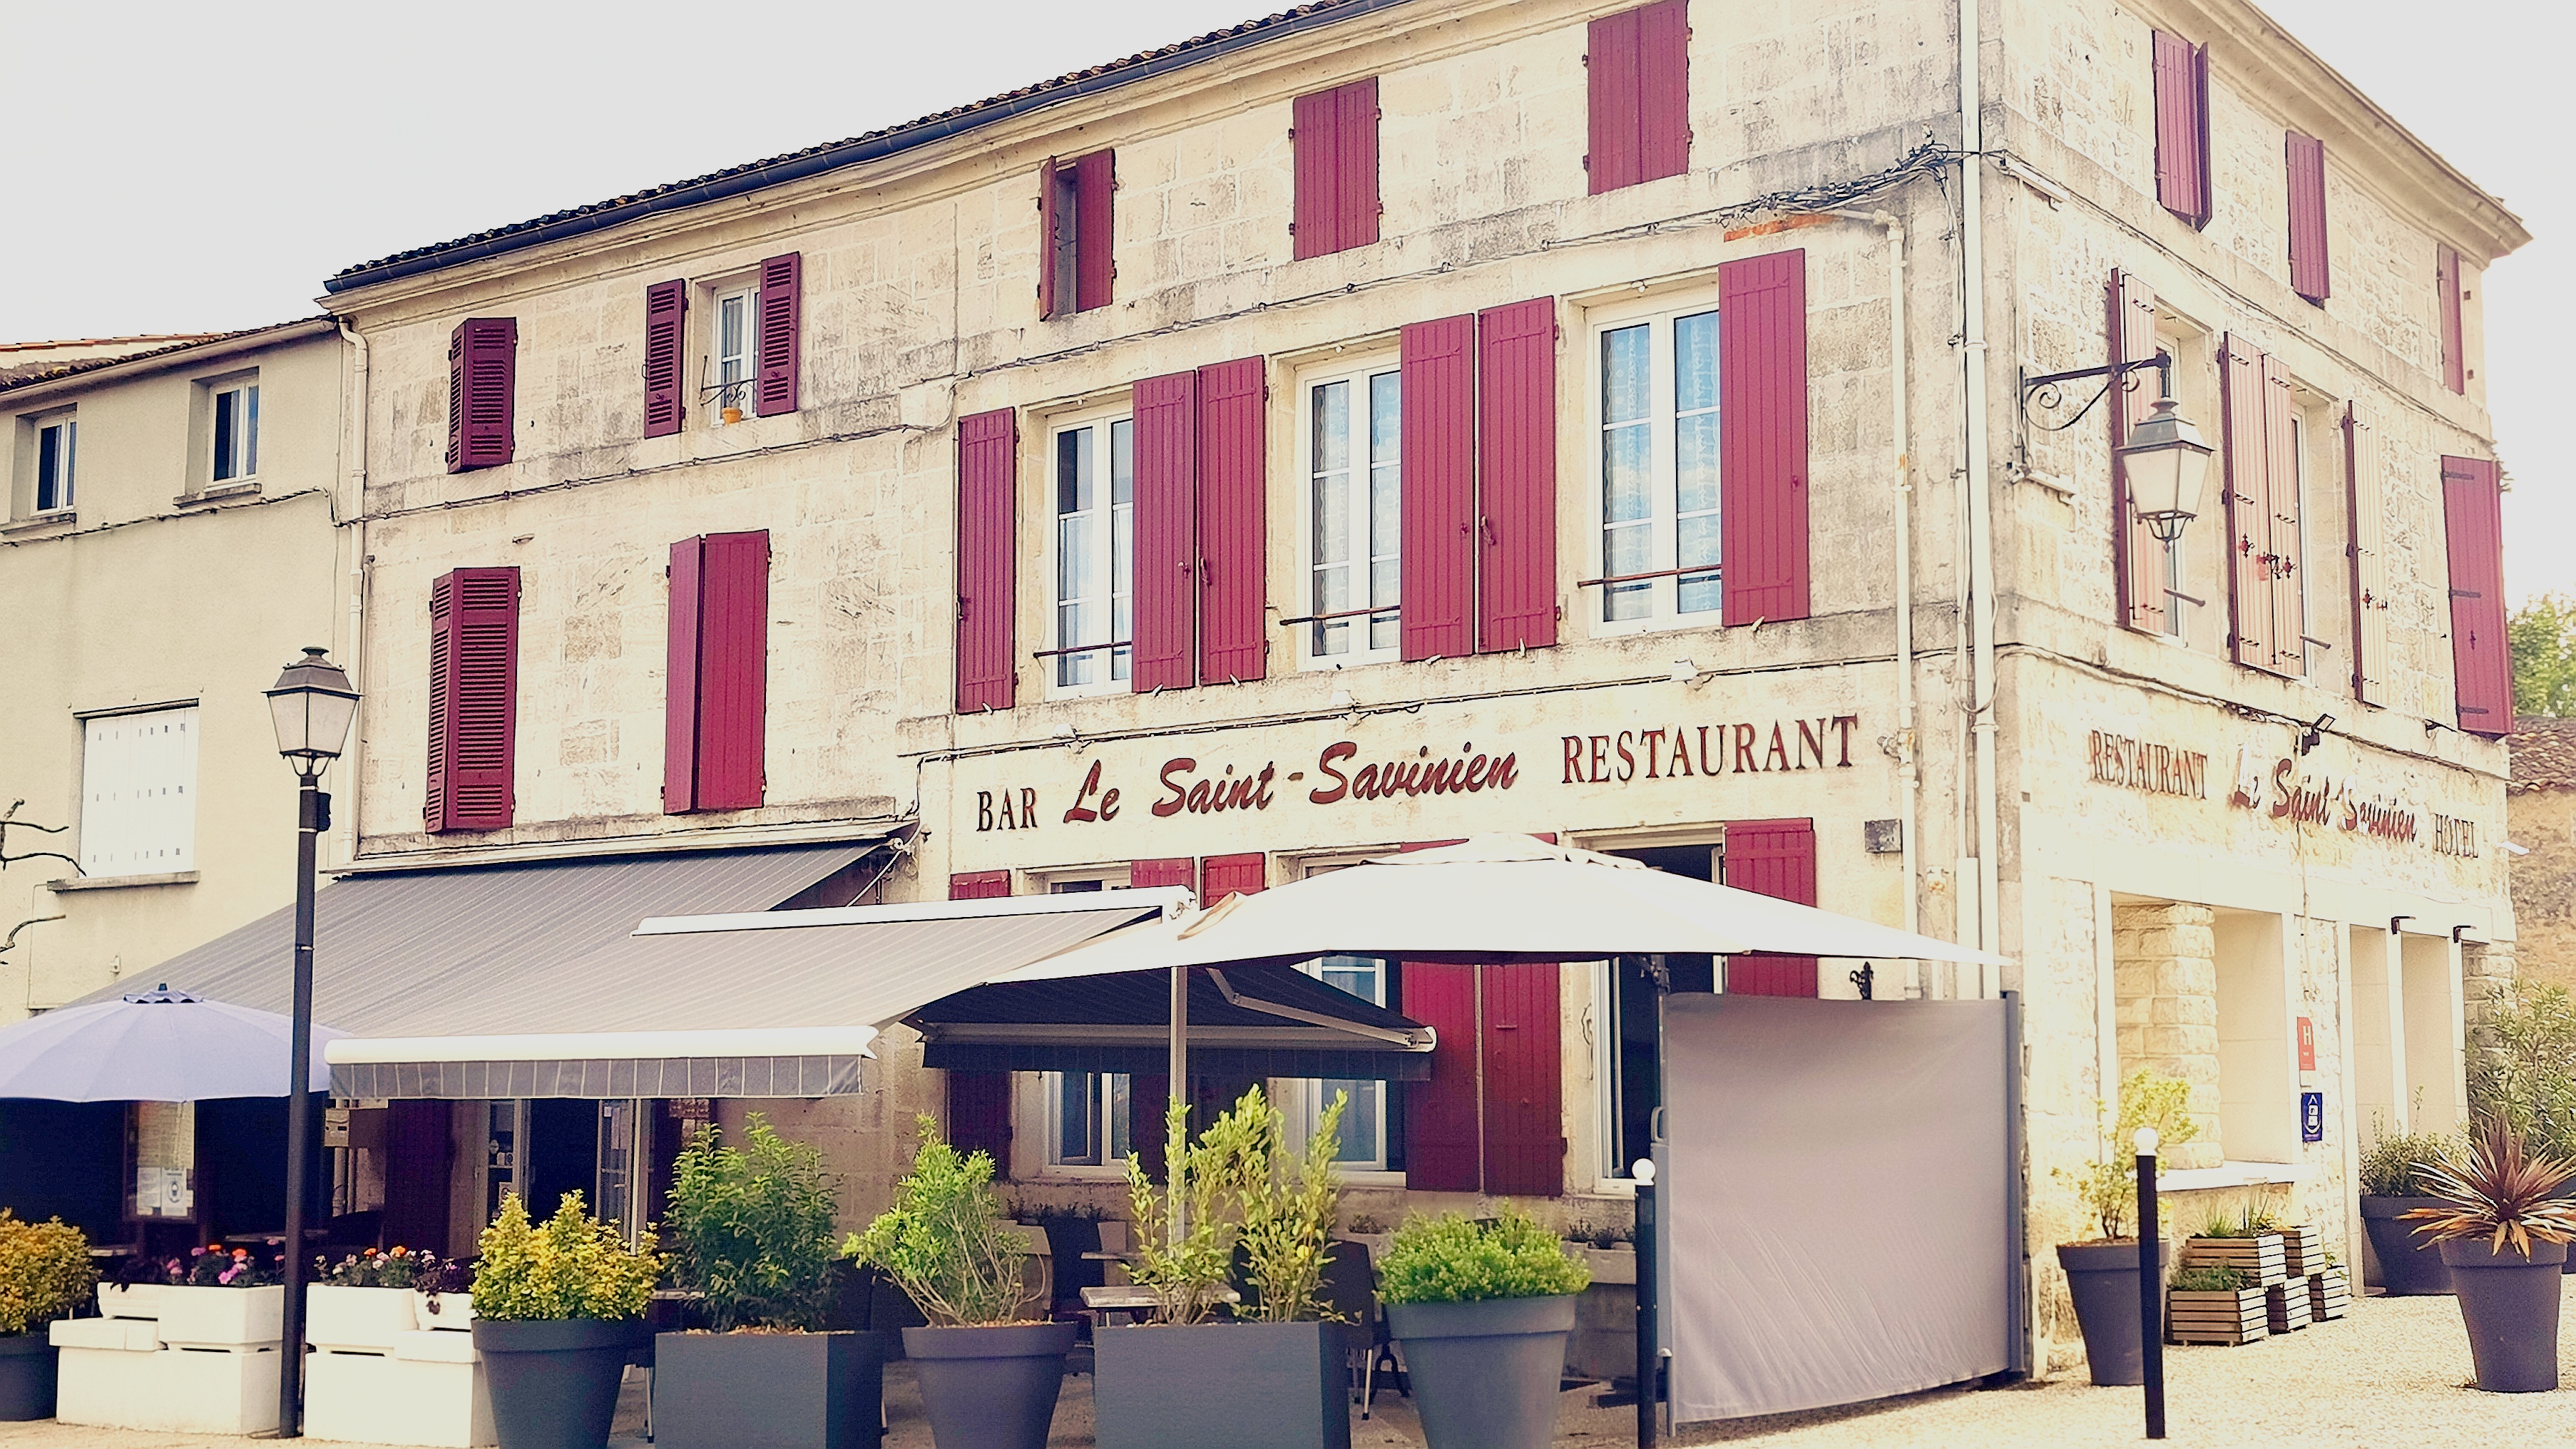 Facade de l'hotel** Restaurant le Saint Savinien. Contact